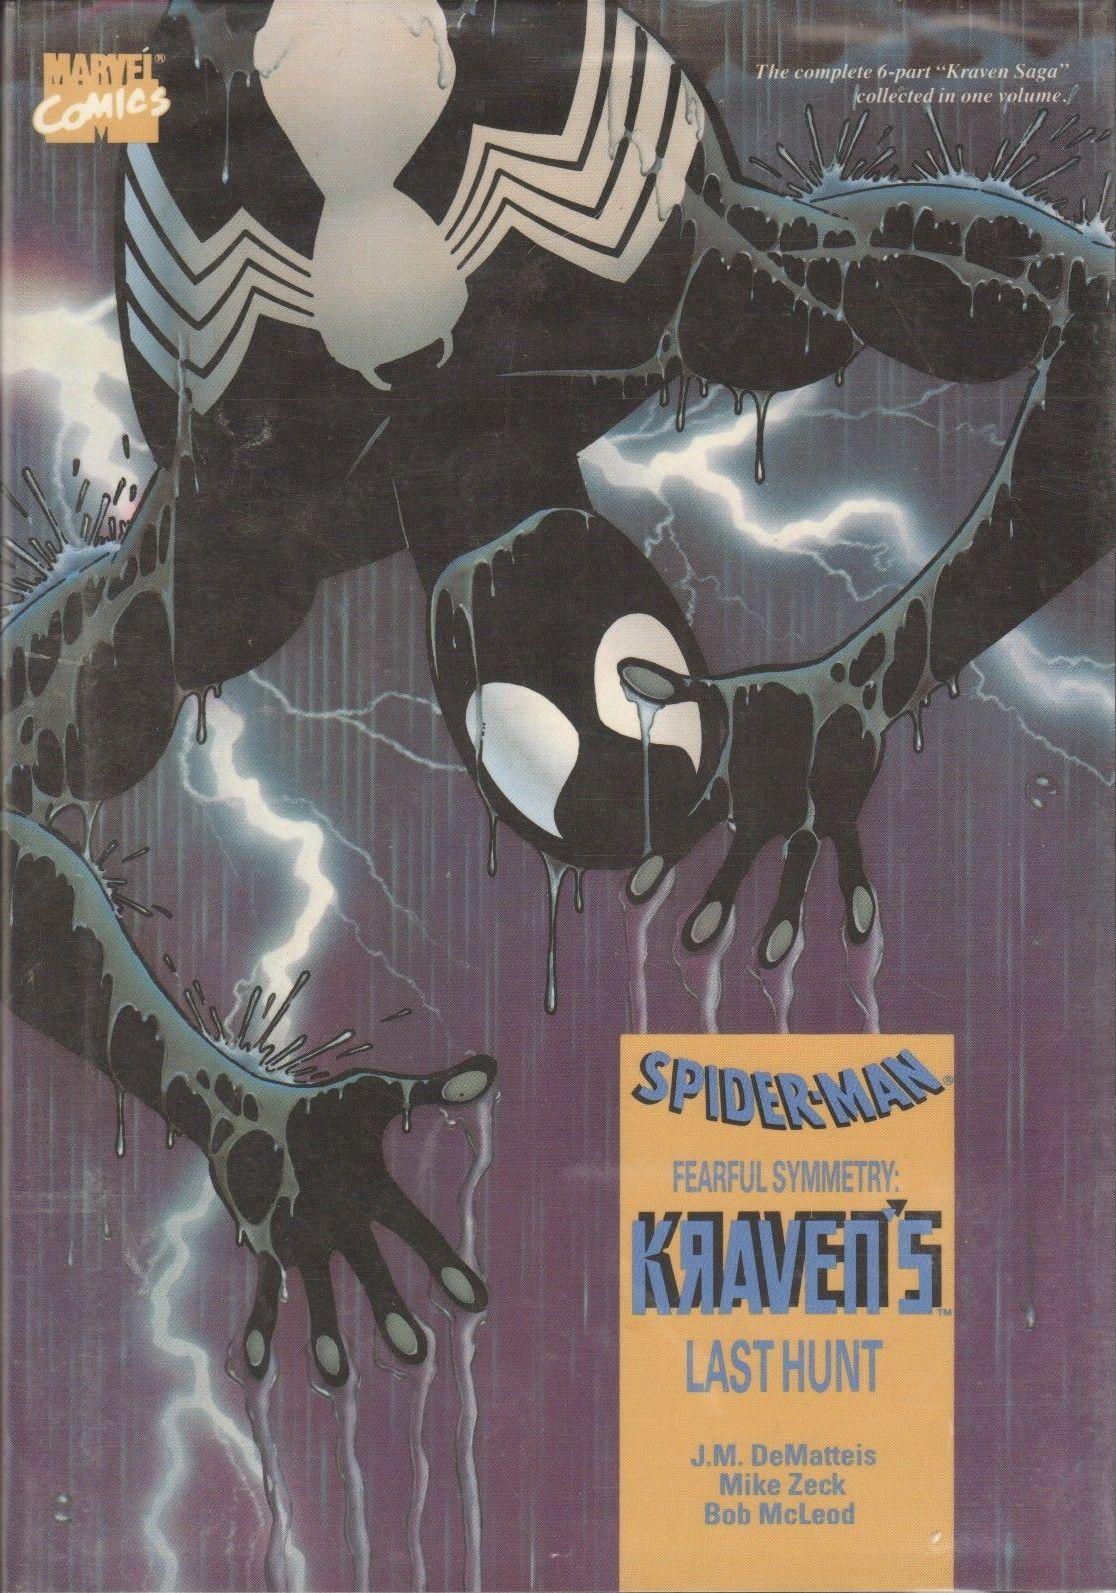 Spider-Man Fearful Symmetry: Kraven's Last Hunt HC Vol. 1 #1